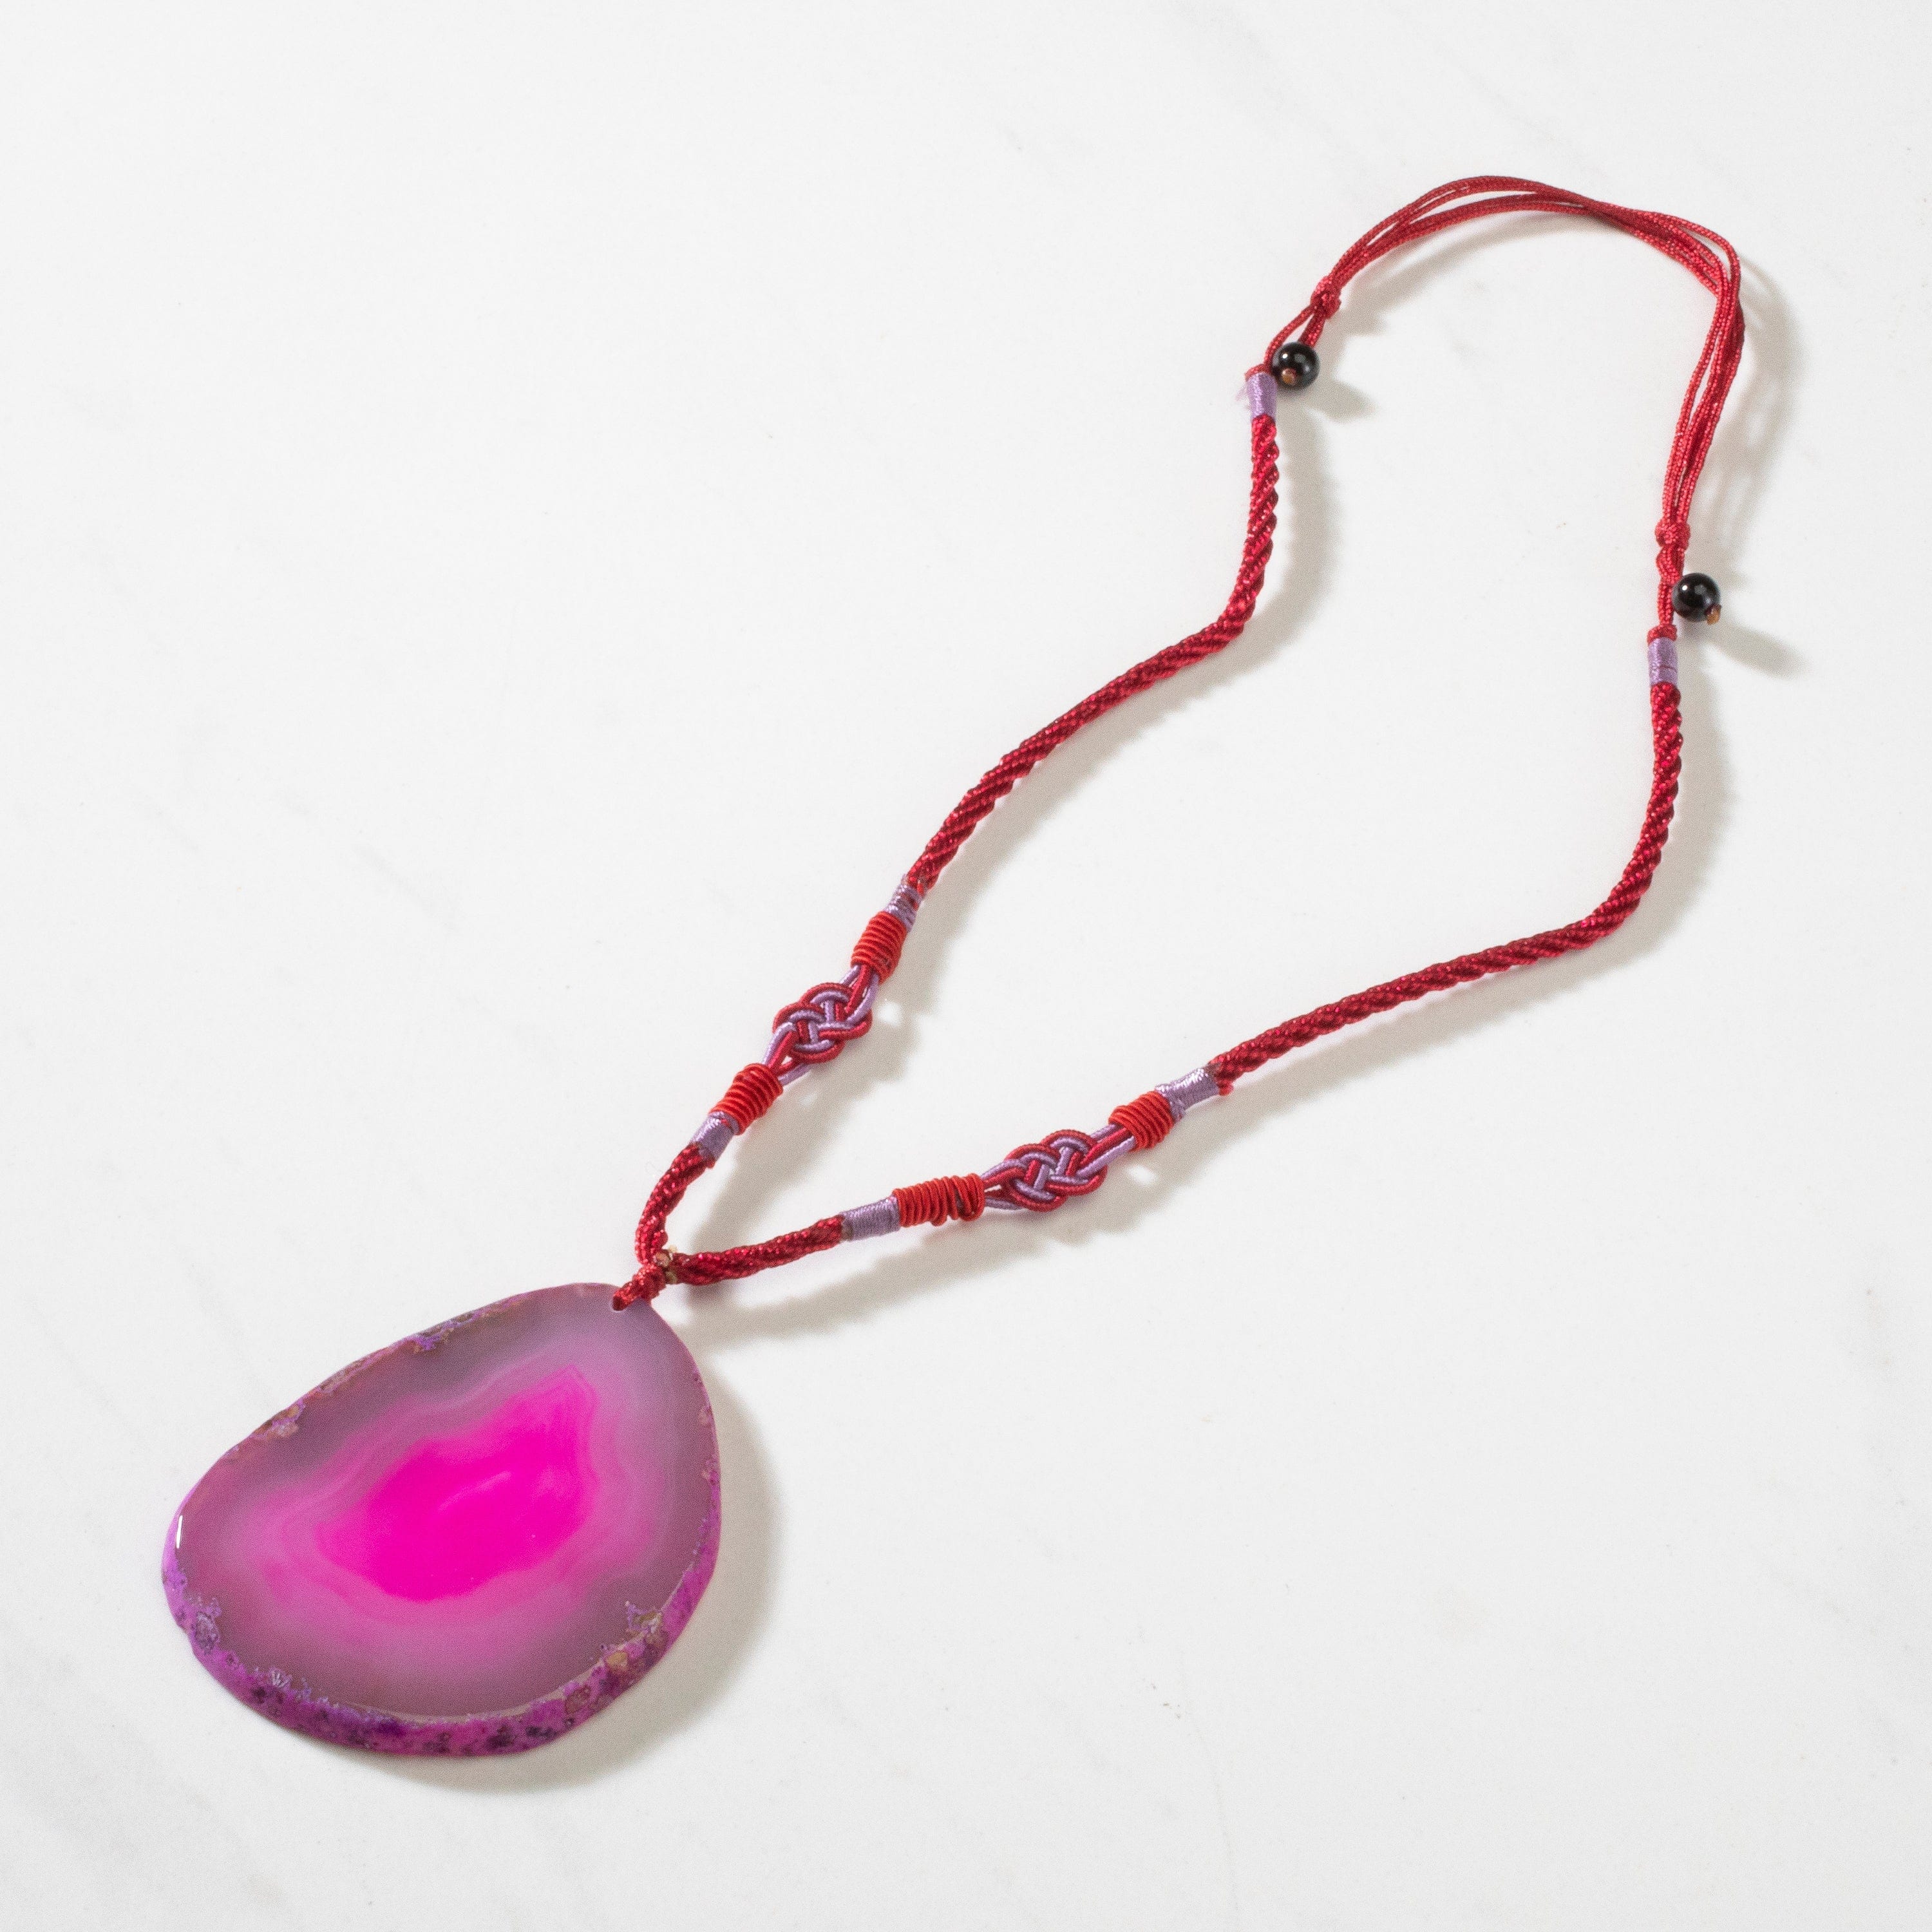 KALIFANO Gemstone Necklaces Pink Agate Geode Slice Necklace BLUE-BAS-PK